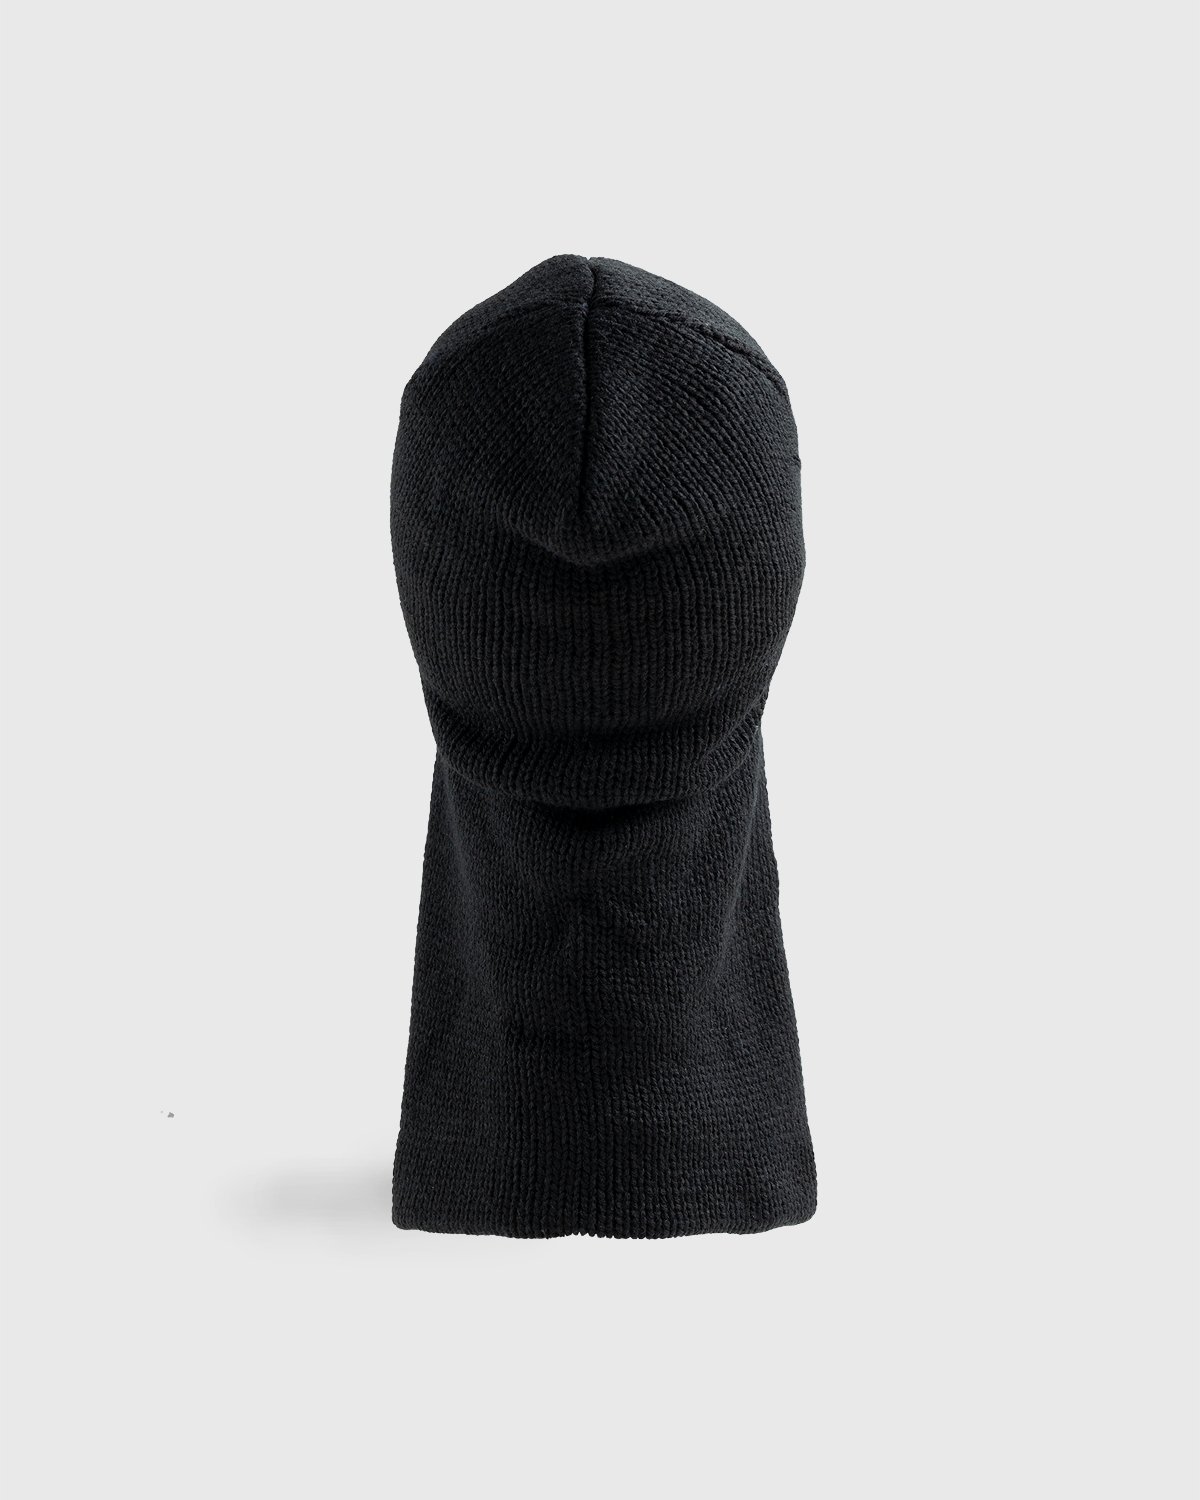 Carhartt WIP - Storm Mask Black - Accessories - Black - Image 4